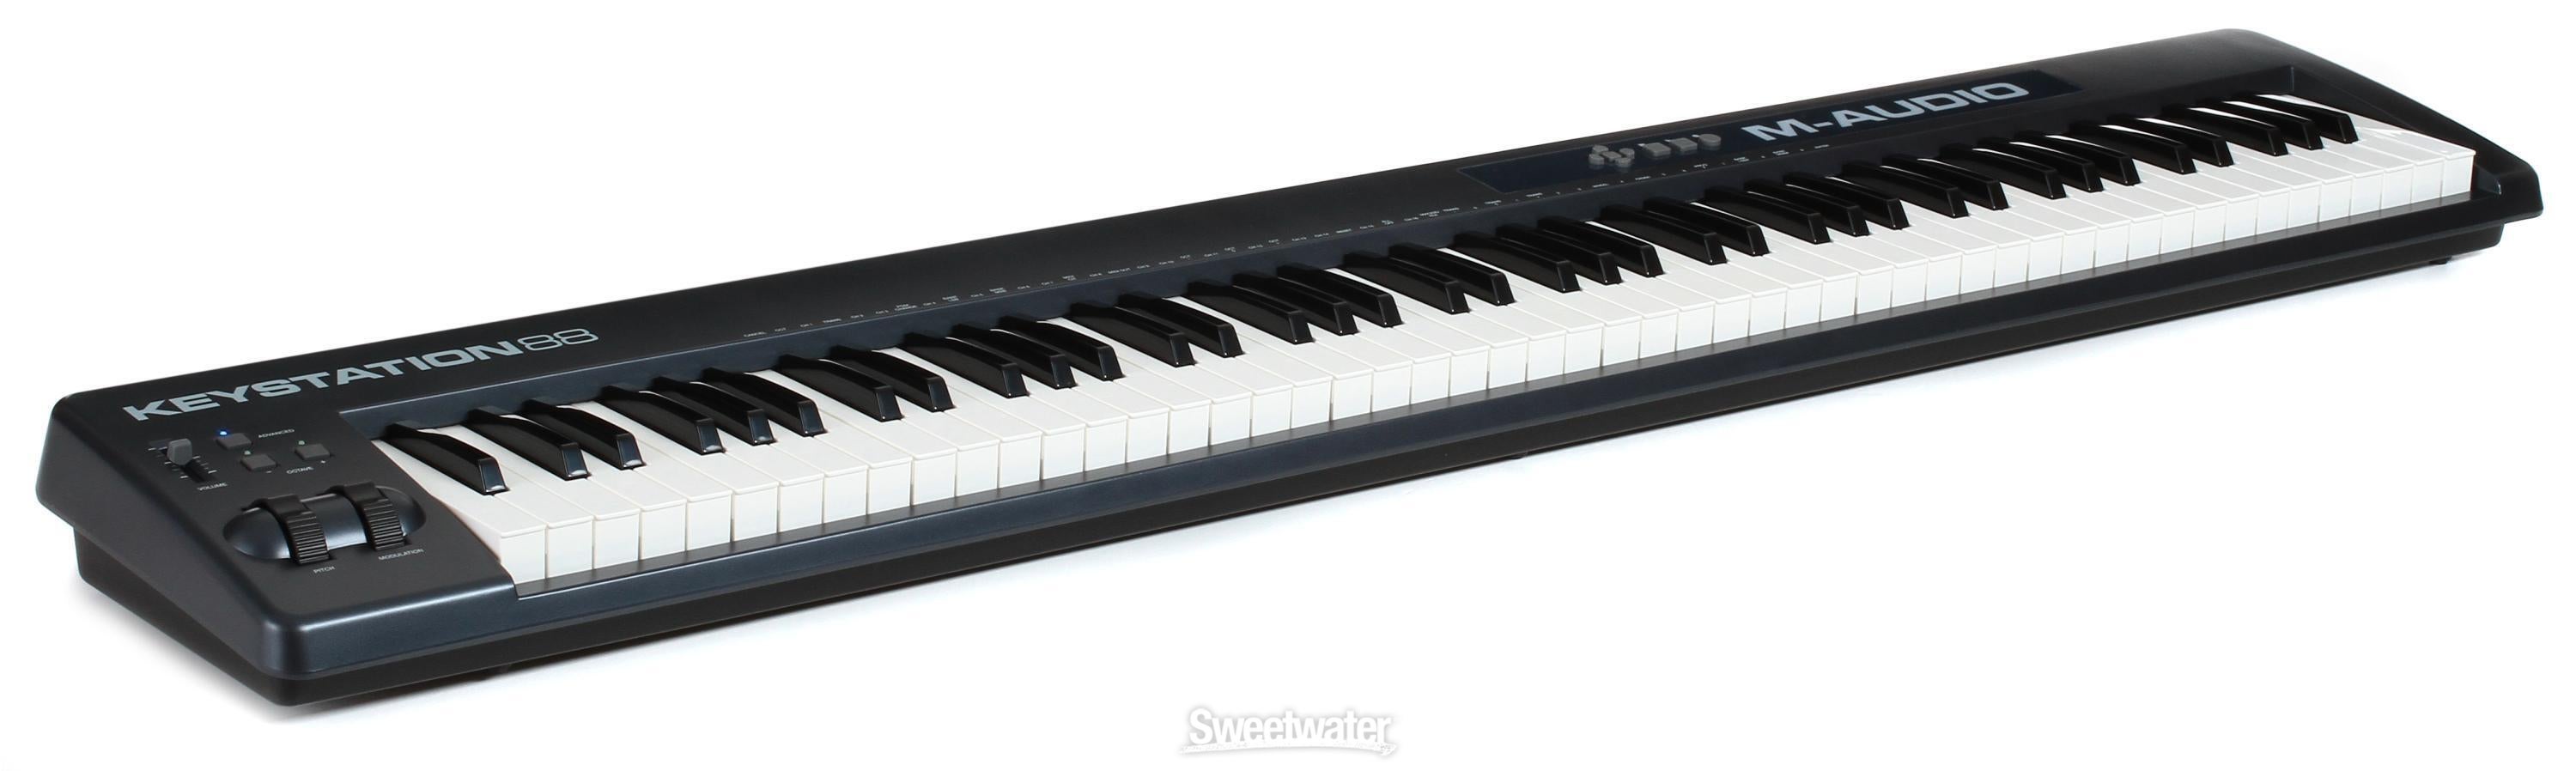 M-Audio Keystation 88 88-key Keyboard Controller Reviews | Sweetwater